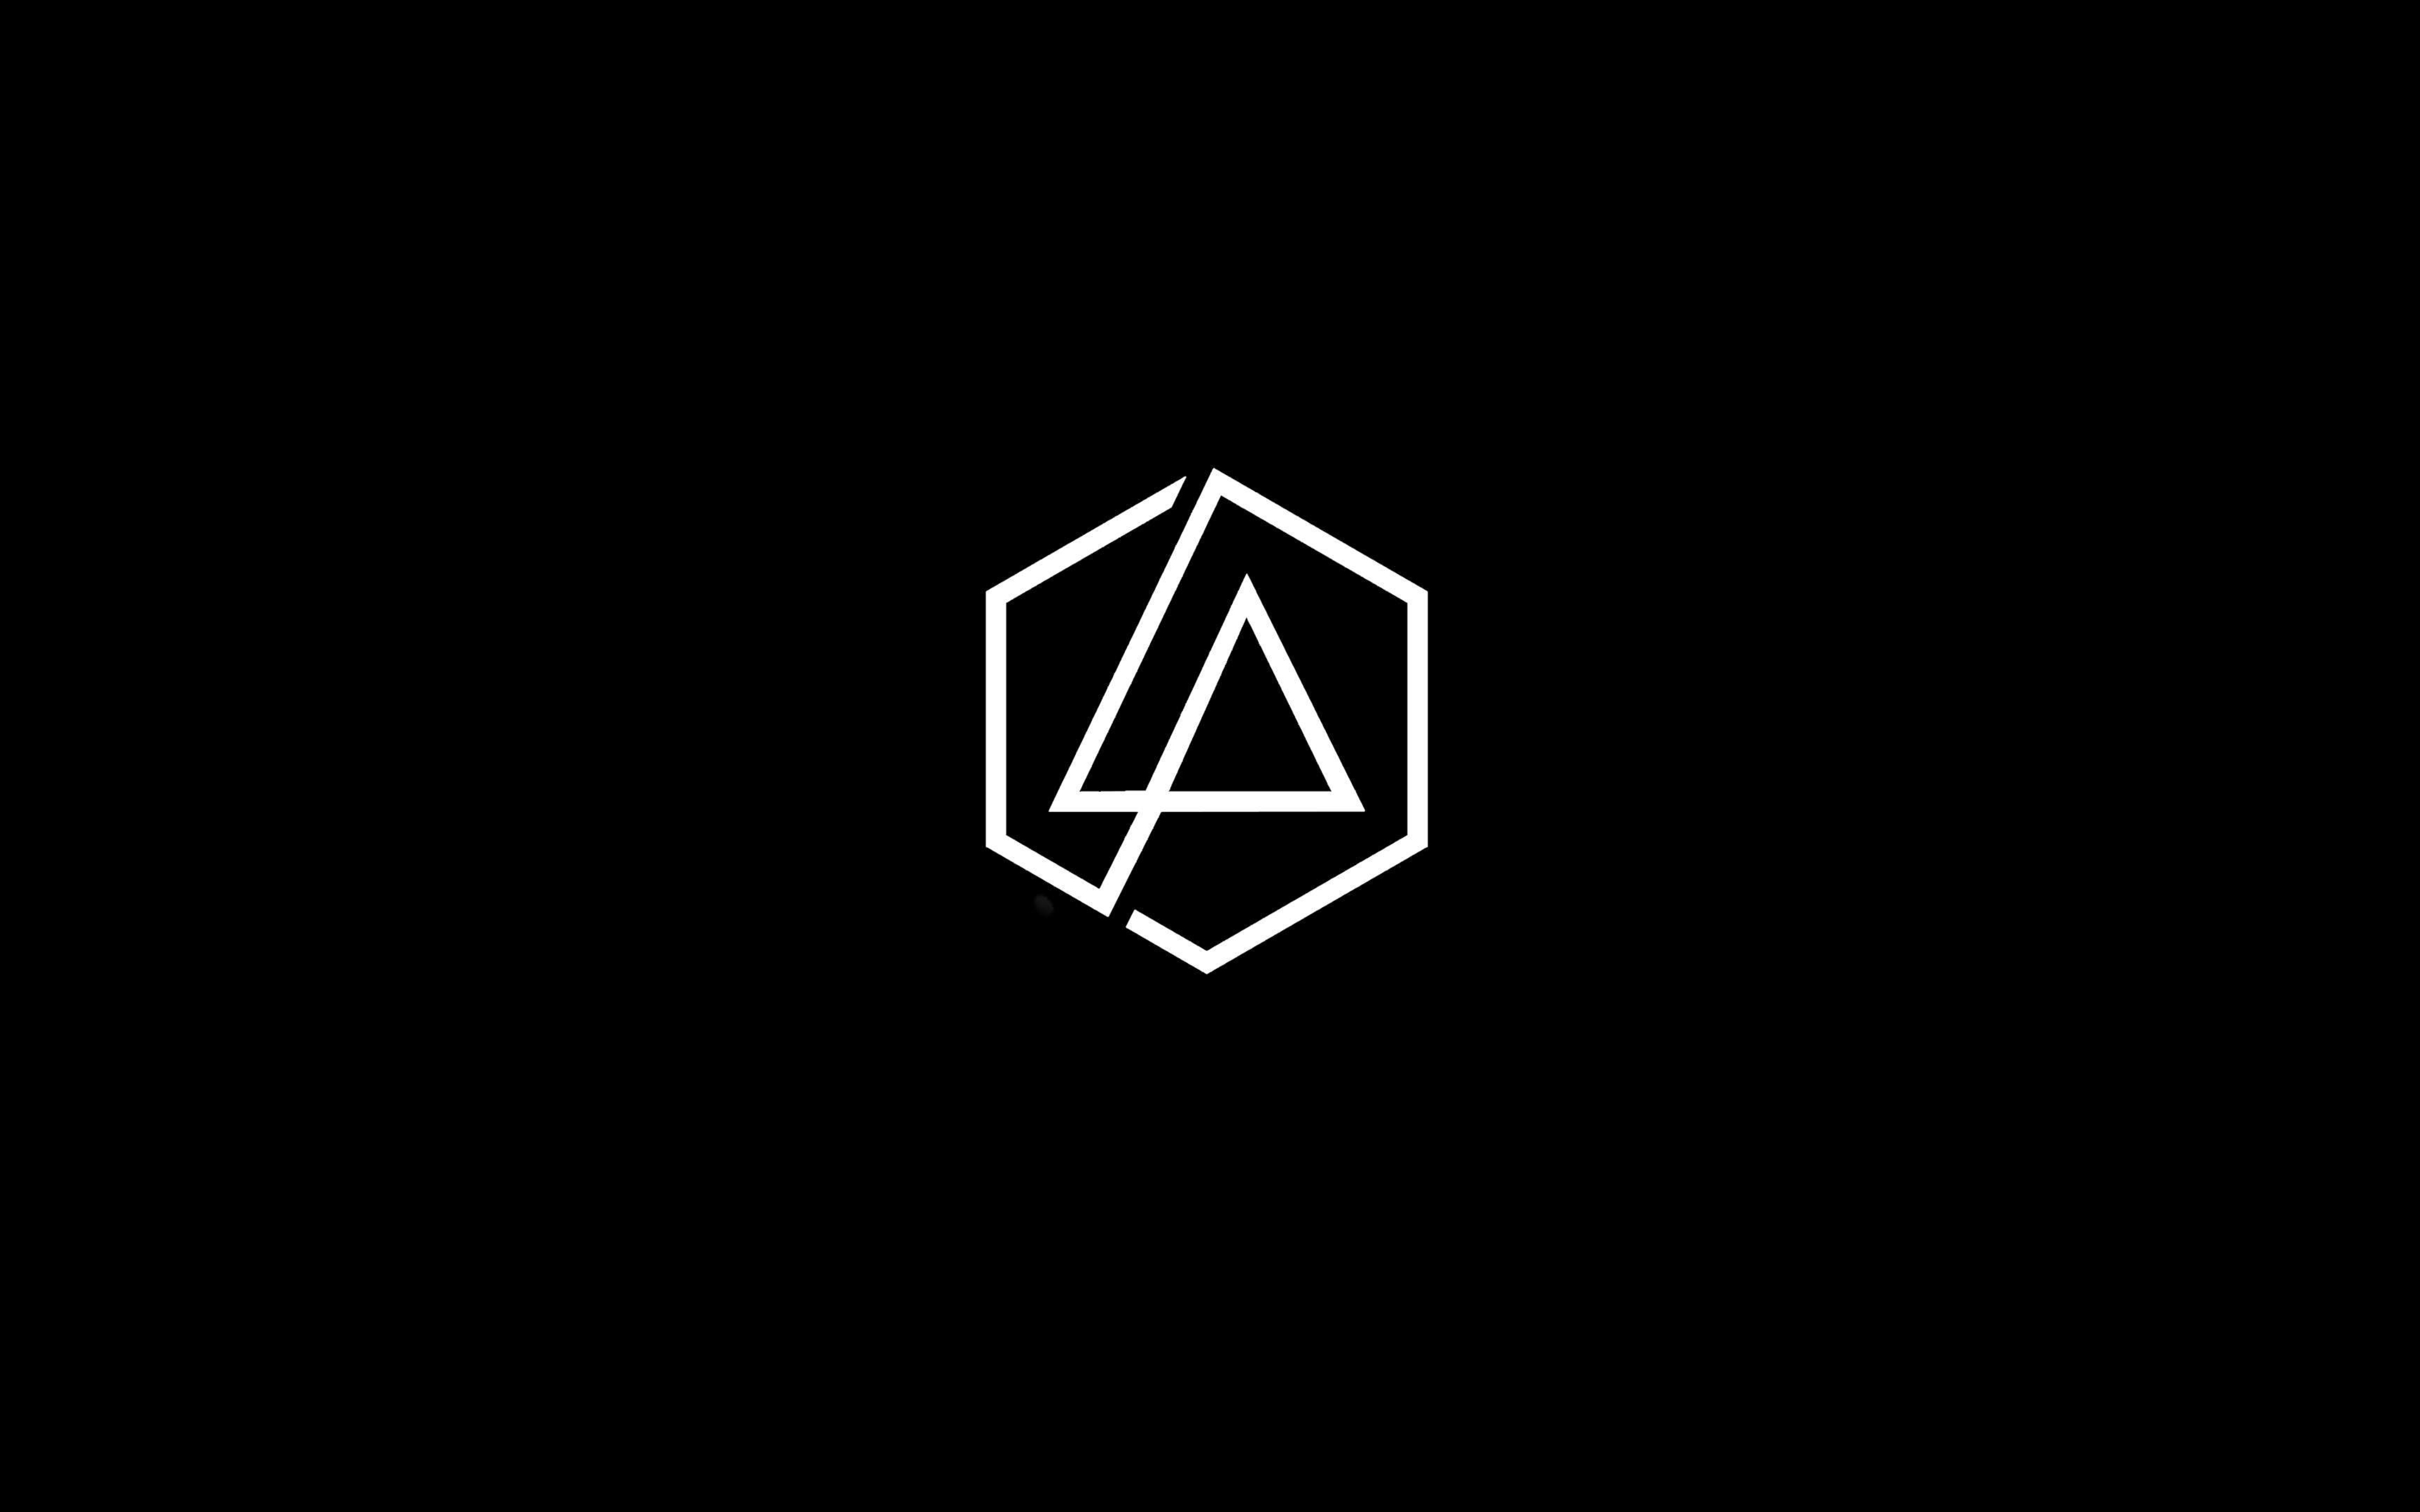 3840x2400 Linkin Park Logo 4k 4k HD 4k Wallpapers, Images ...